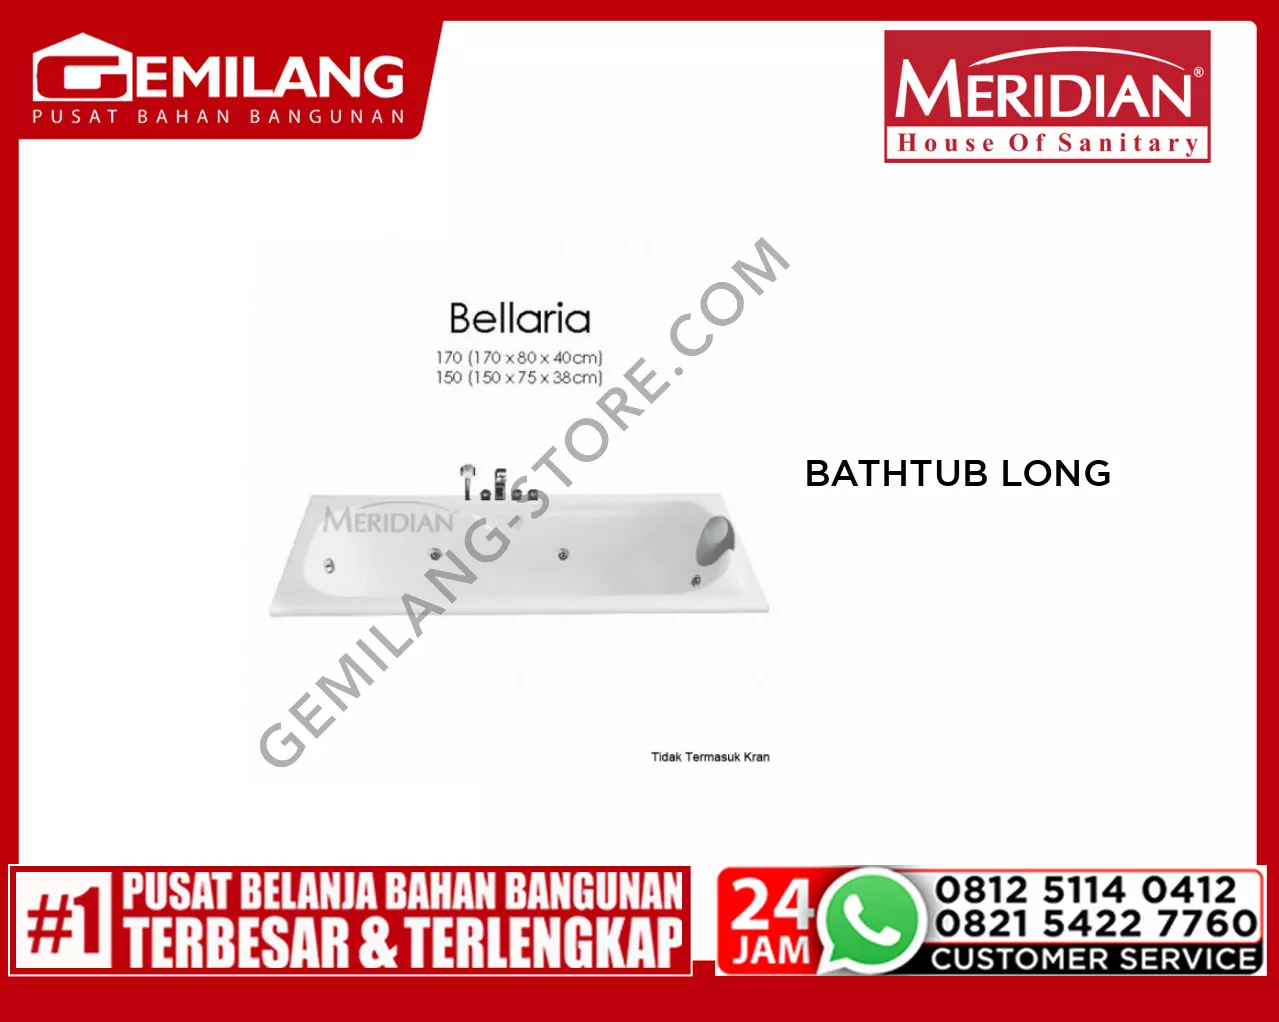 MERIDIAN BATHTUB LONG BELLARIA 140